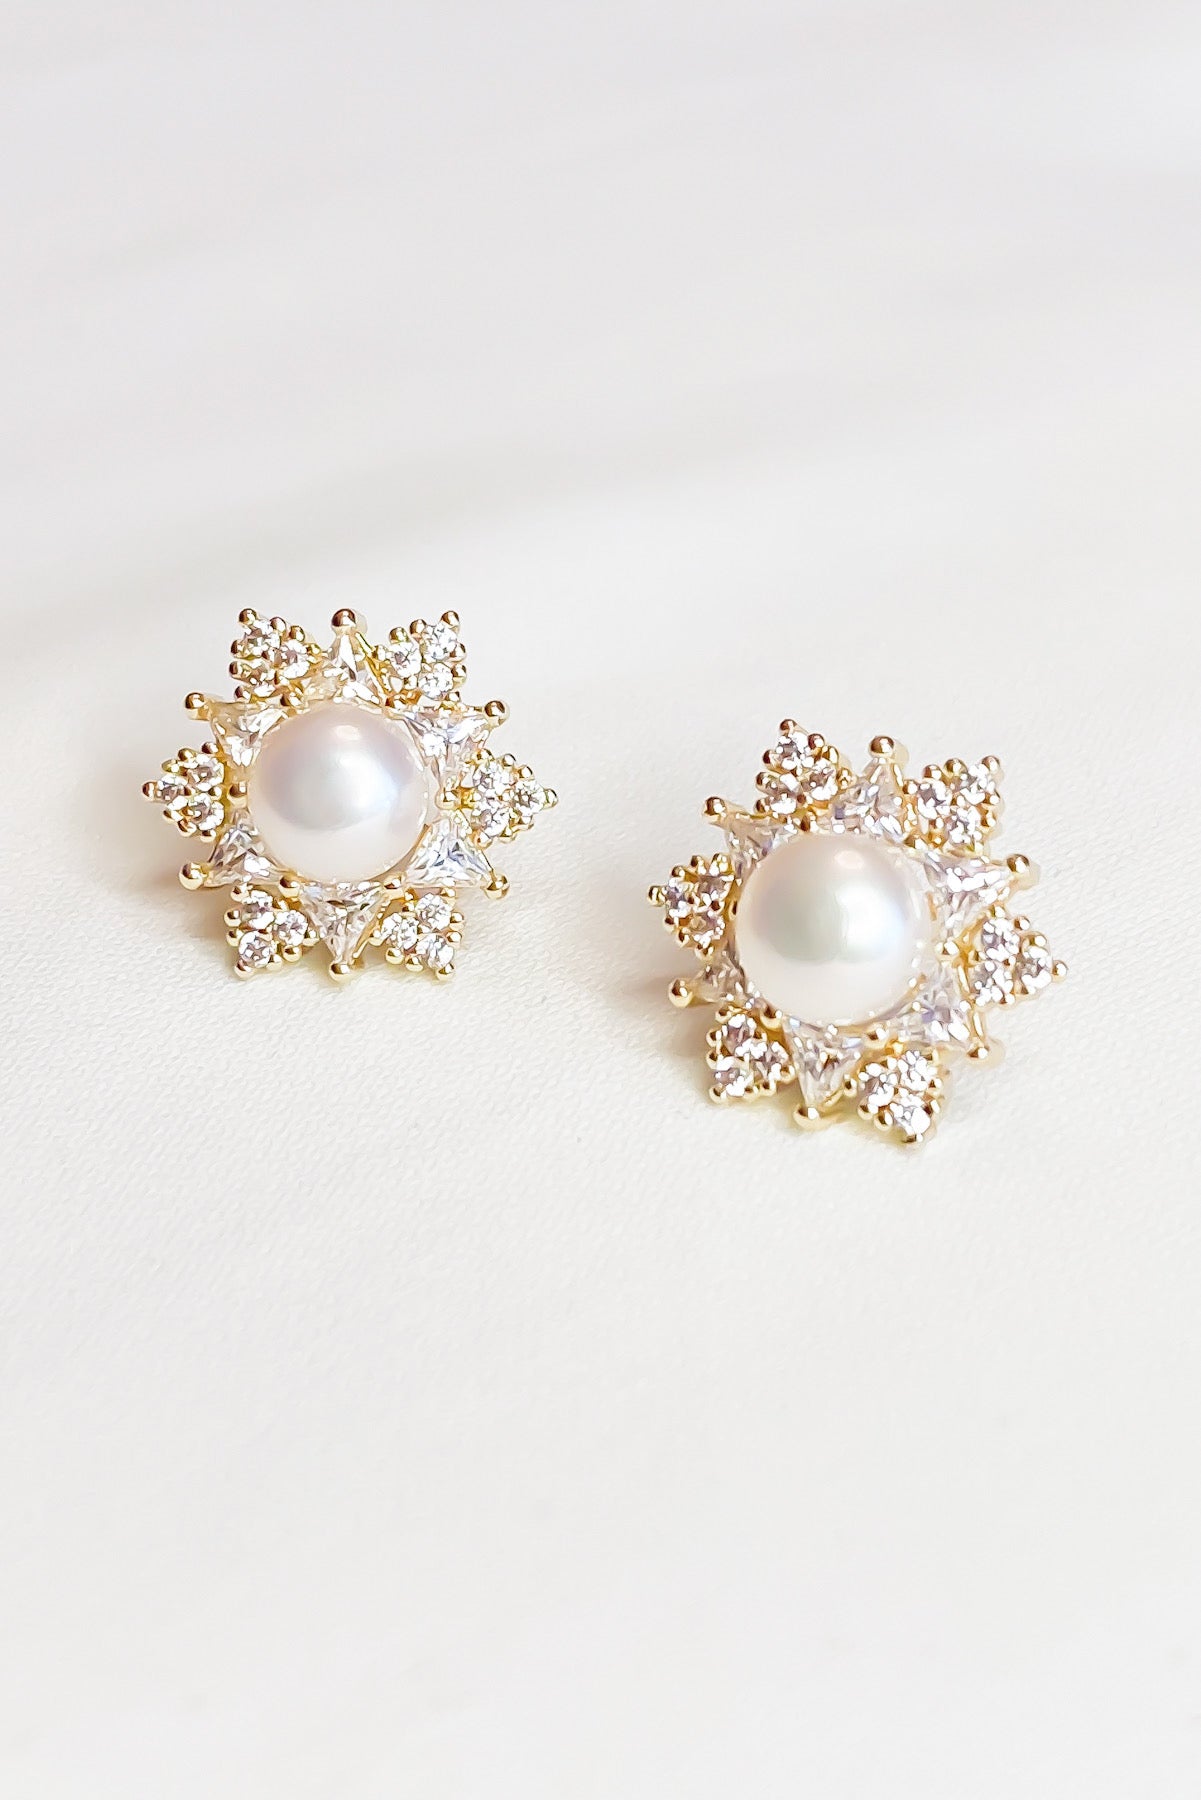 SKYE San Francisco Shop Chic Modern Elegant Classy Women Jewelry French Parisian Minimalist Elisa 18K Gold Crystal Pearl Earrings